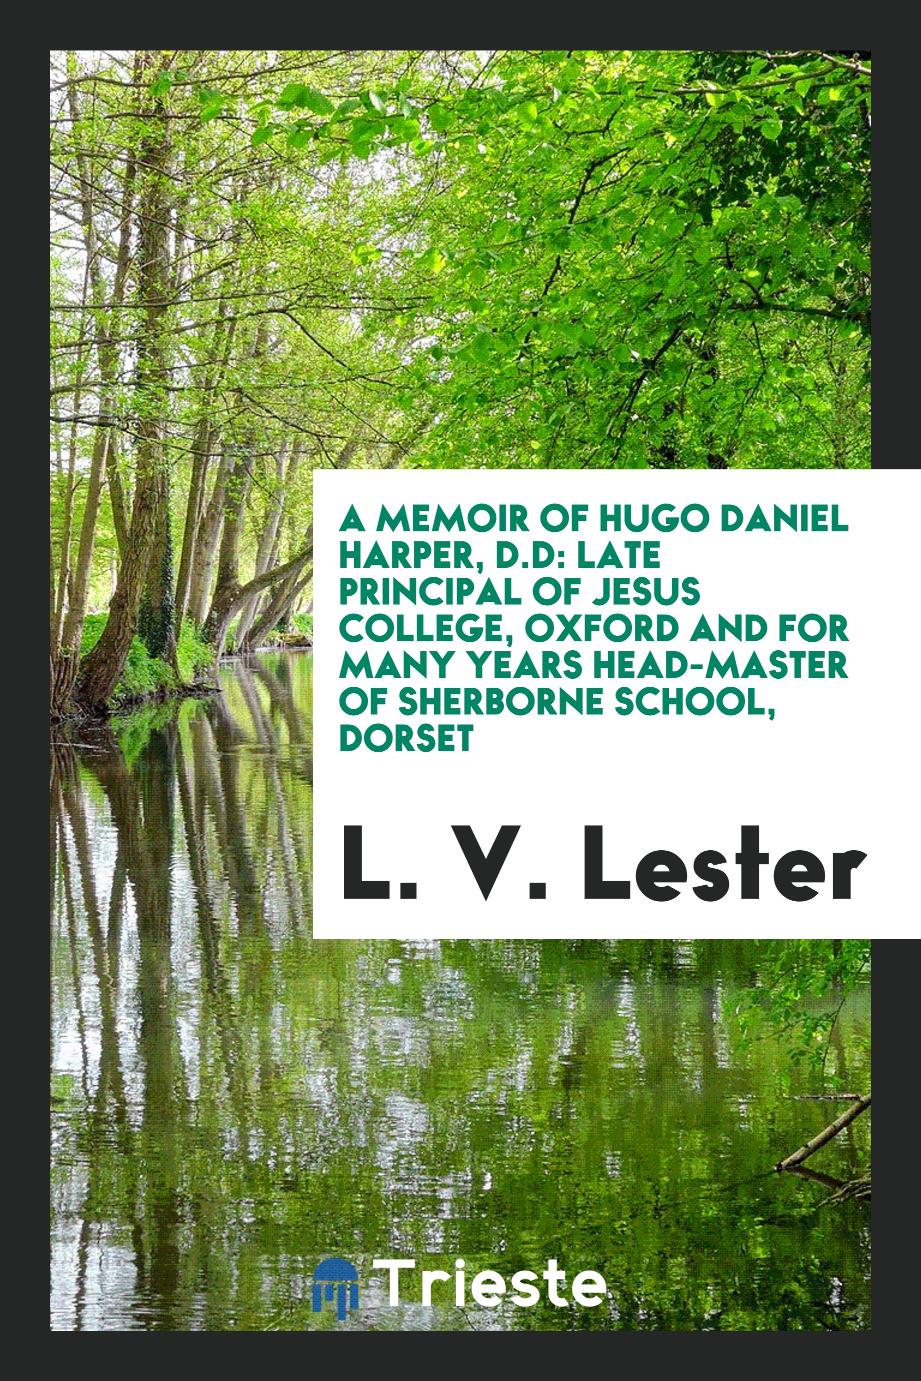 A Memoir of Hugo Daniel Harper, D.D: Late Principal of Jesus College, Oxford and for Many Years Head-Master of Sherborne School, Dorset